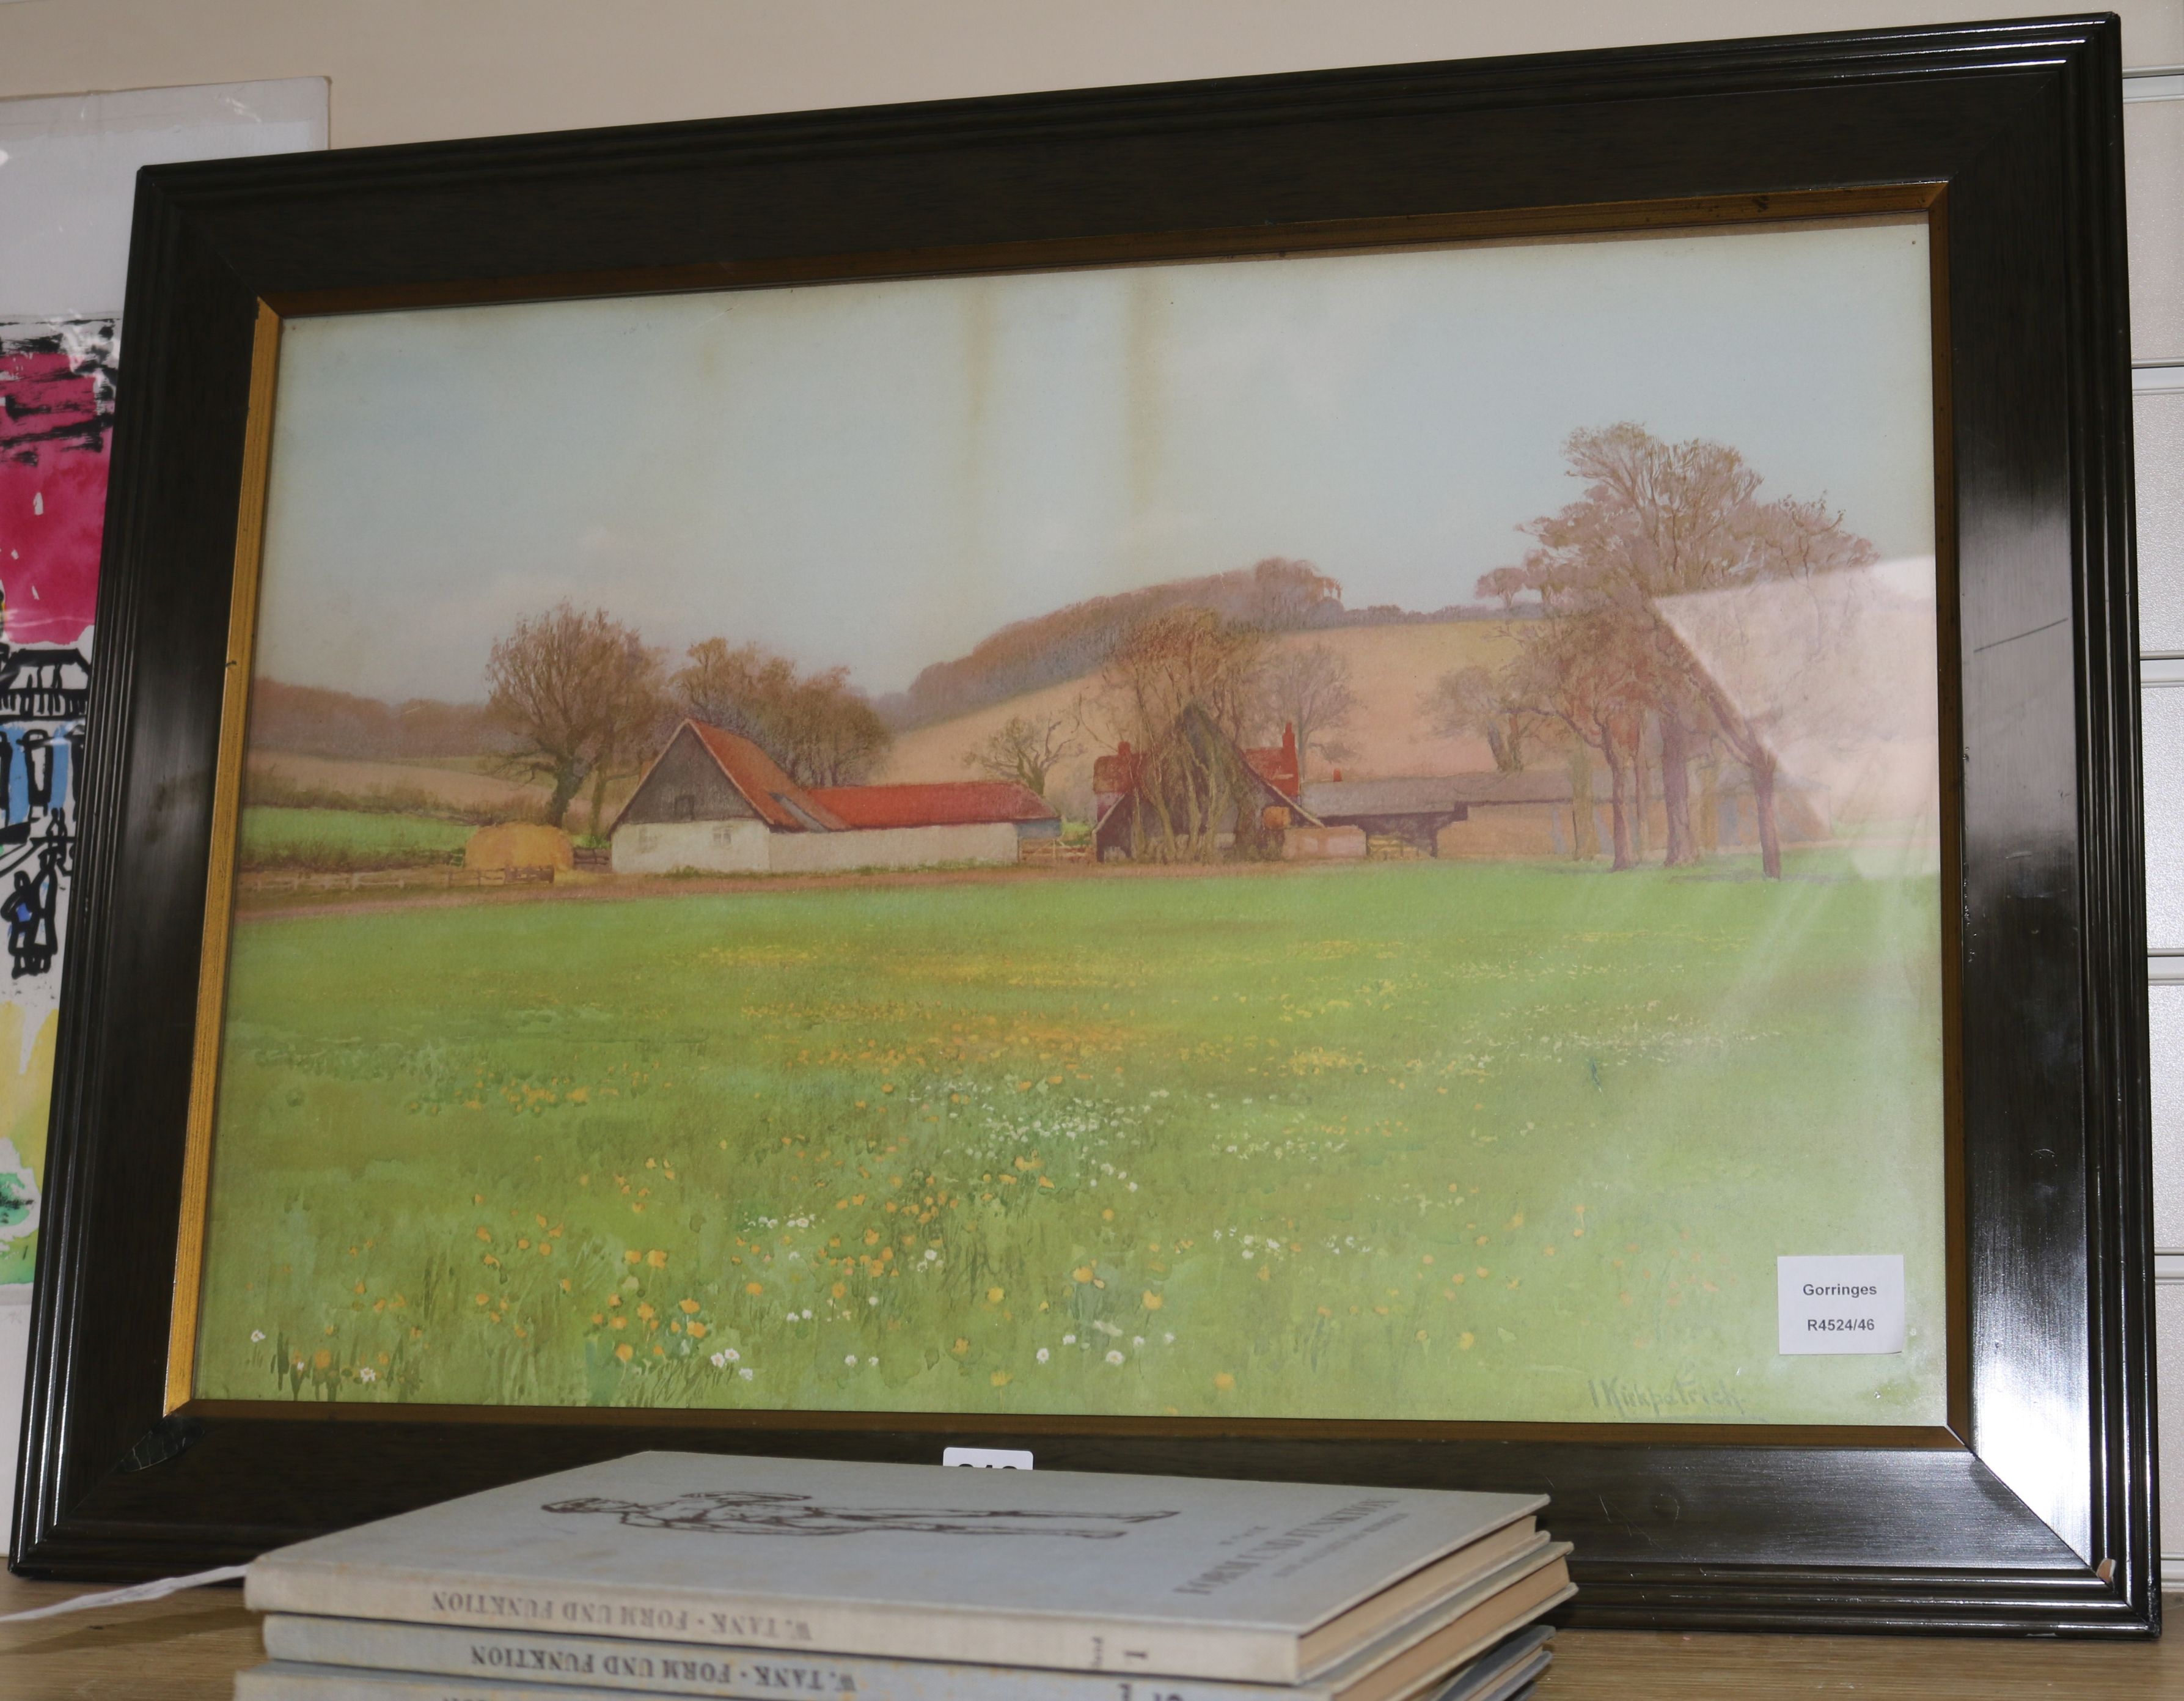 I. Kirkpatrickcolour printlandscape with farm and barn,16 x 24in.